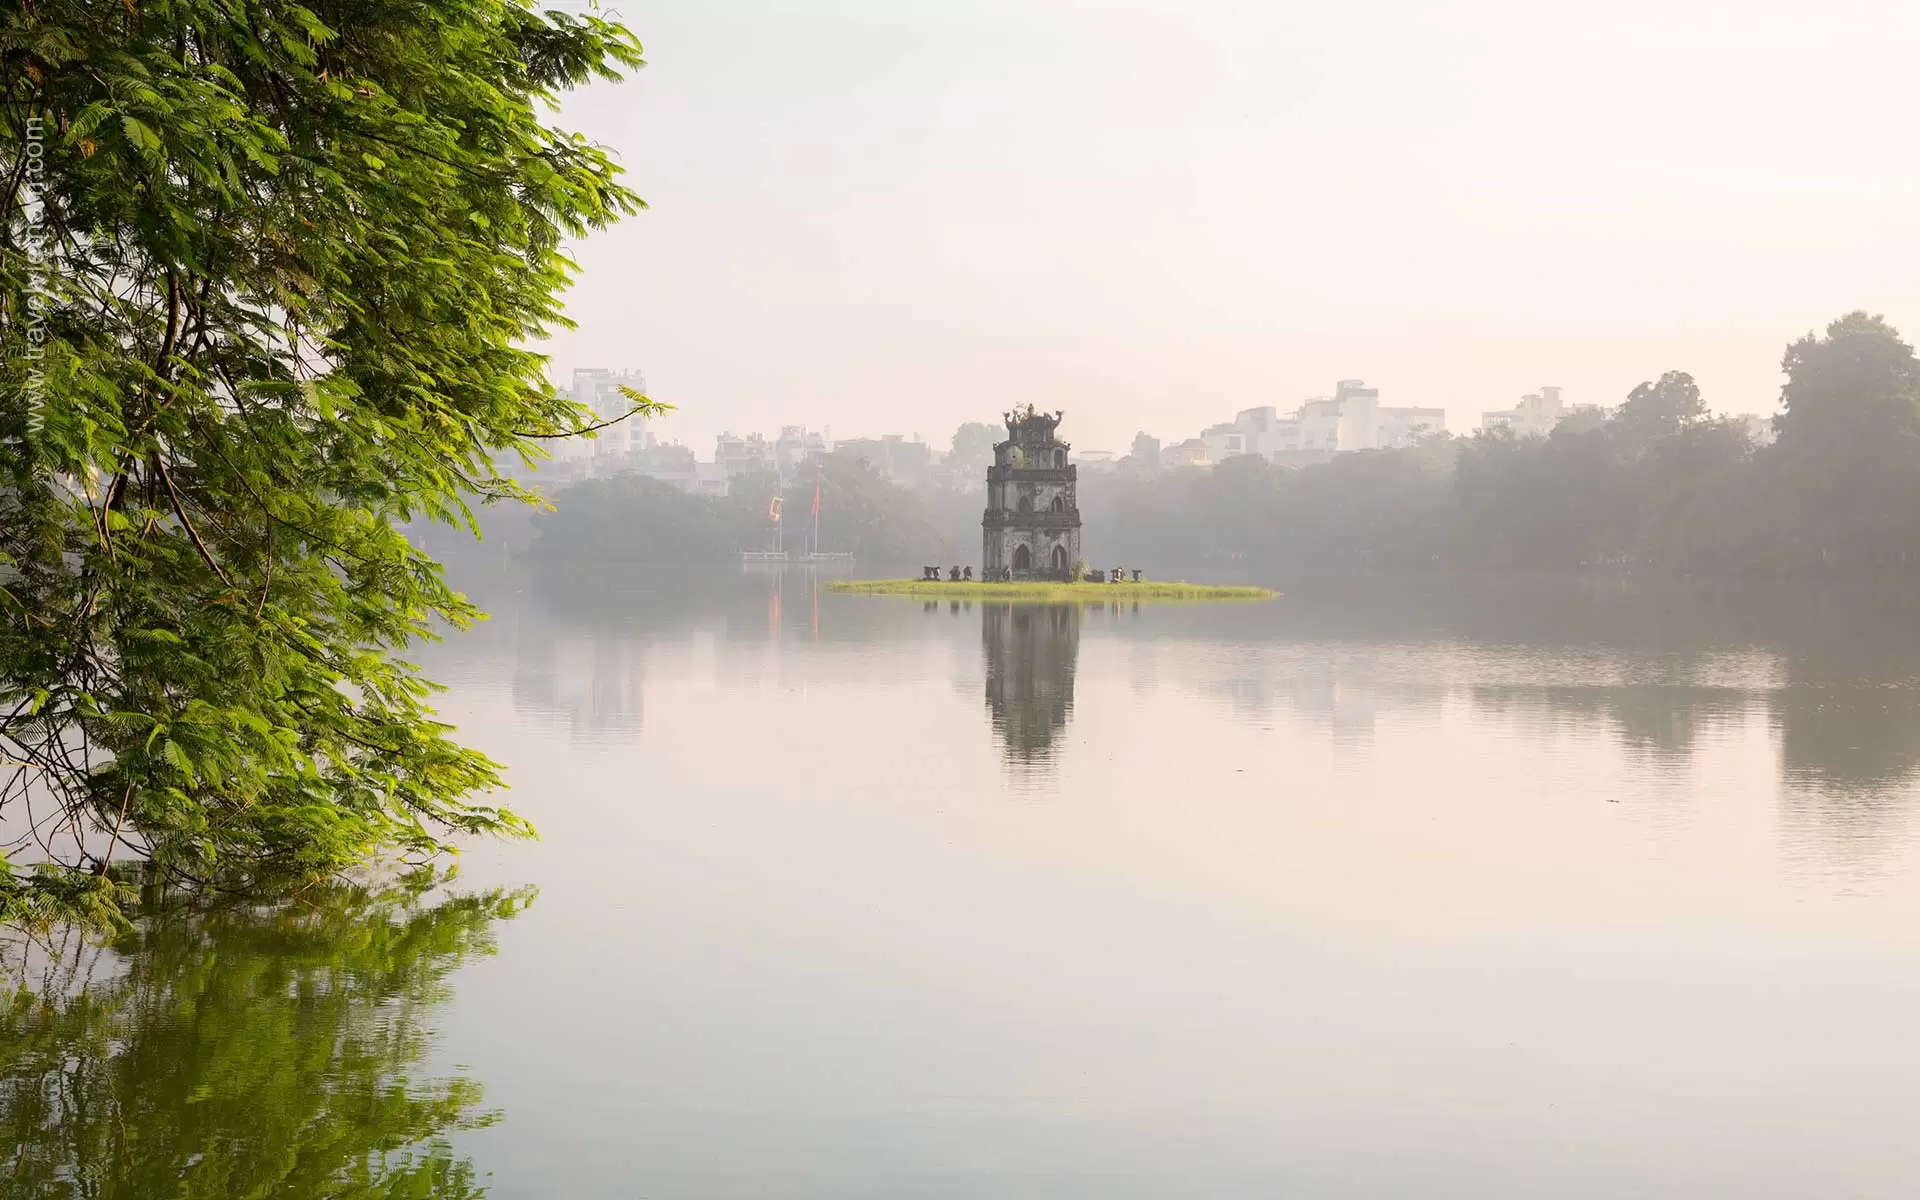 Things to do in Hanoi - Take a stroll around Hoan Kiem Lake